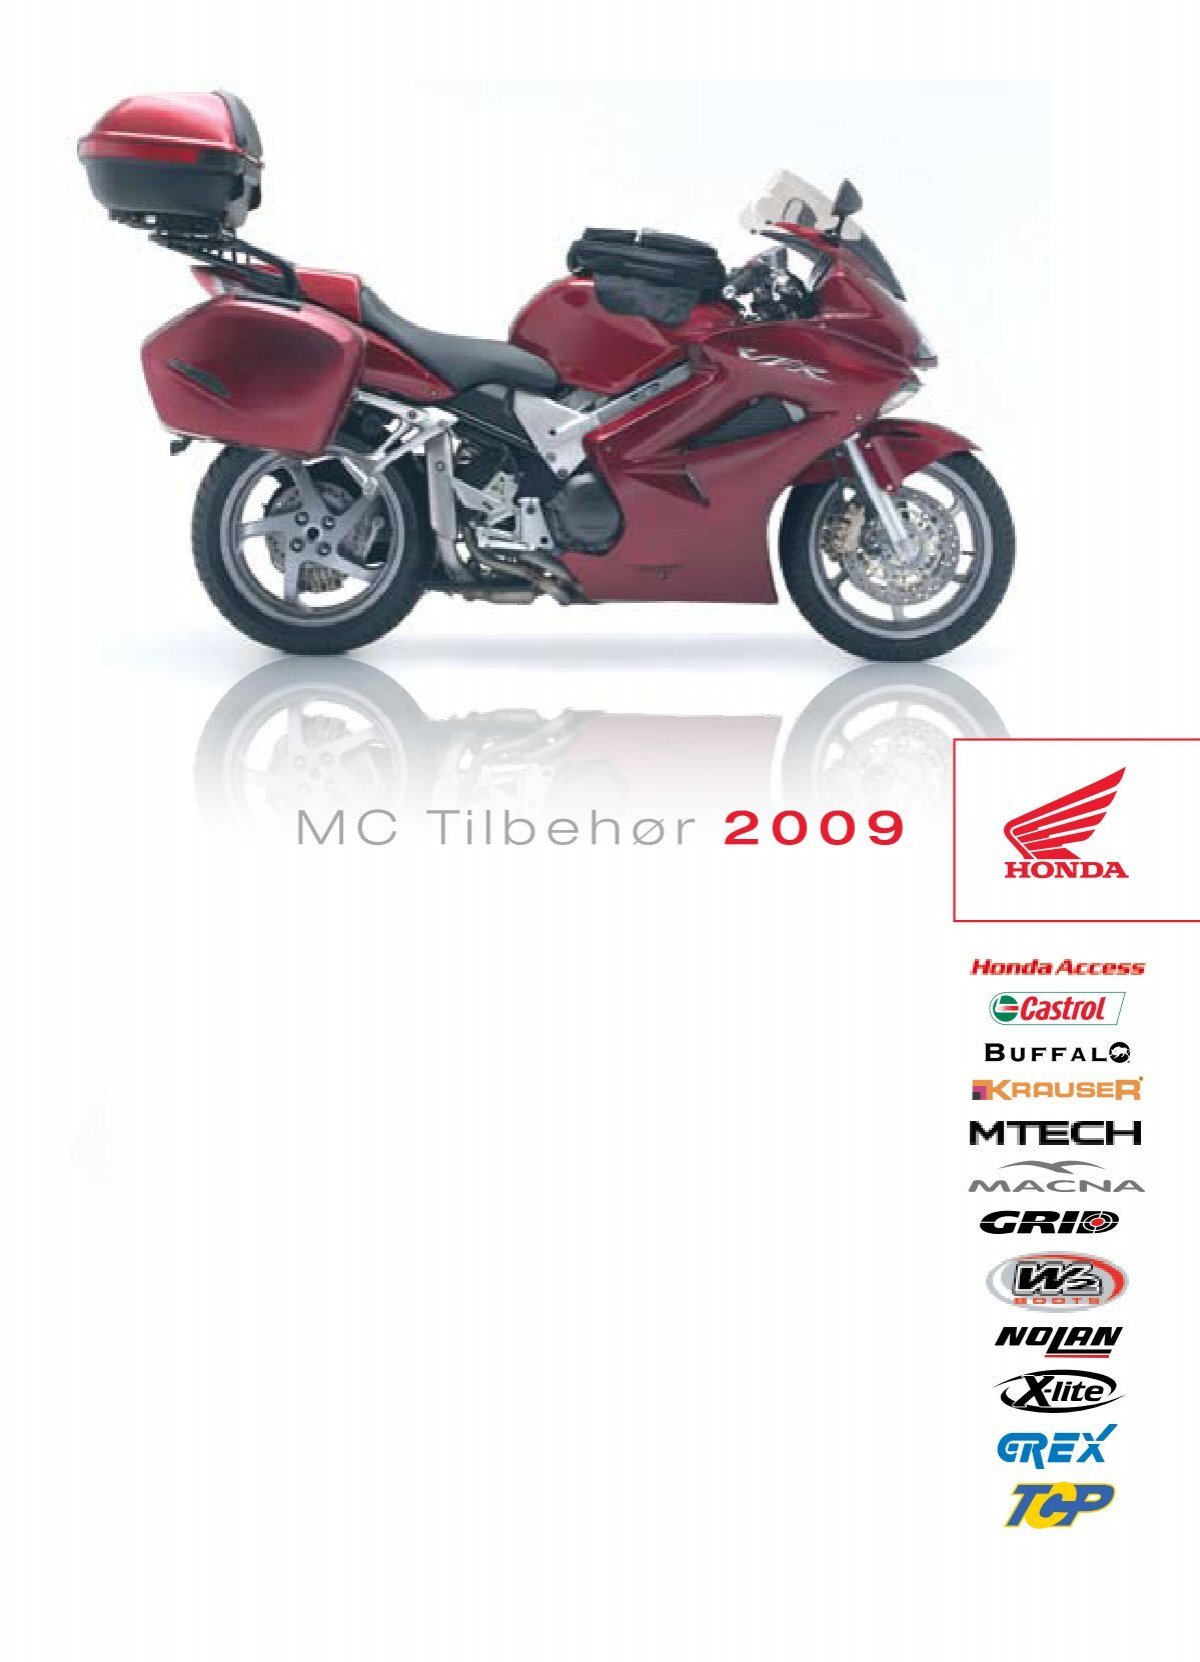 Honda Access '09 katalog (ca. 10 mb) - HOLTUG ApS